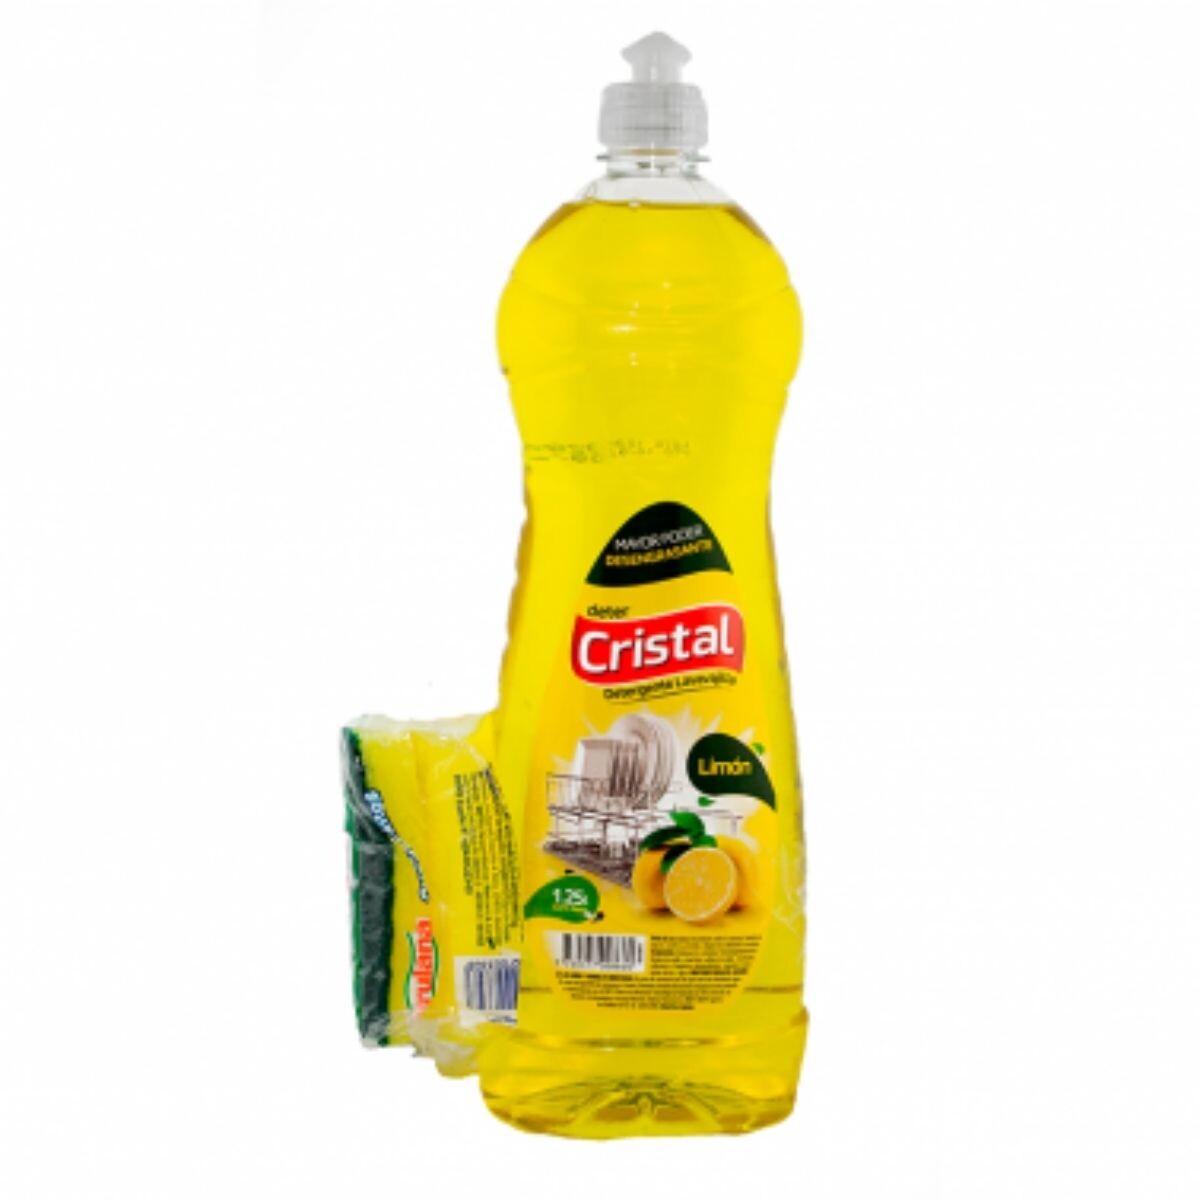 Detergente Líquido Cristal Limón - 1.25 LT + Esponja de Regalo 